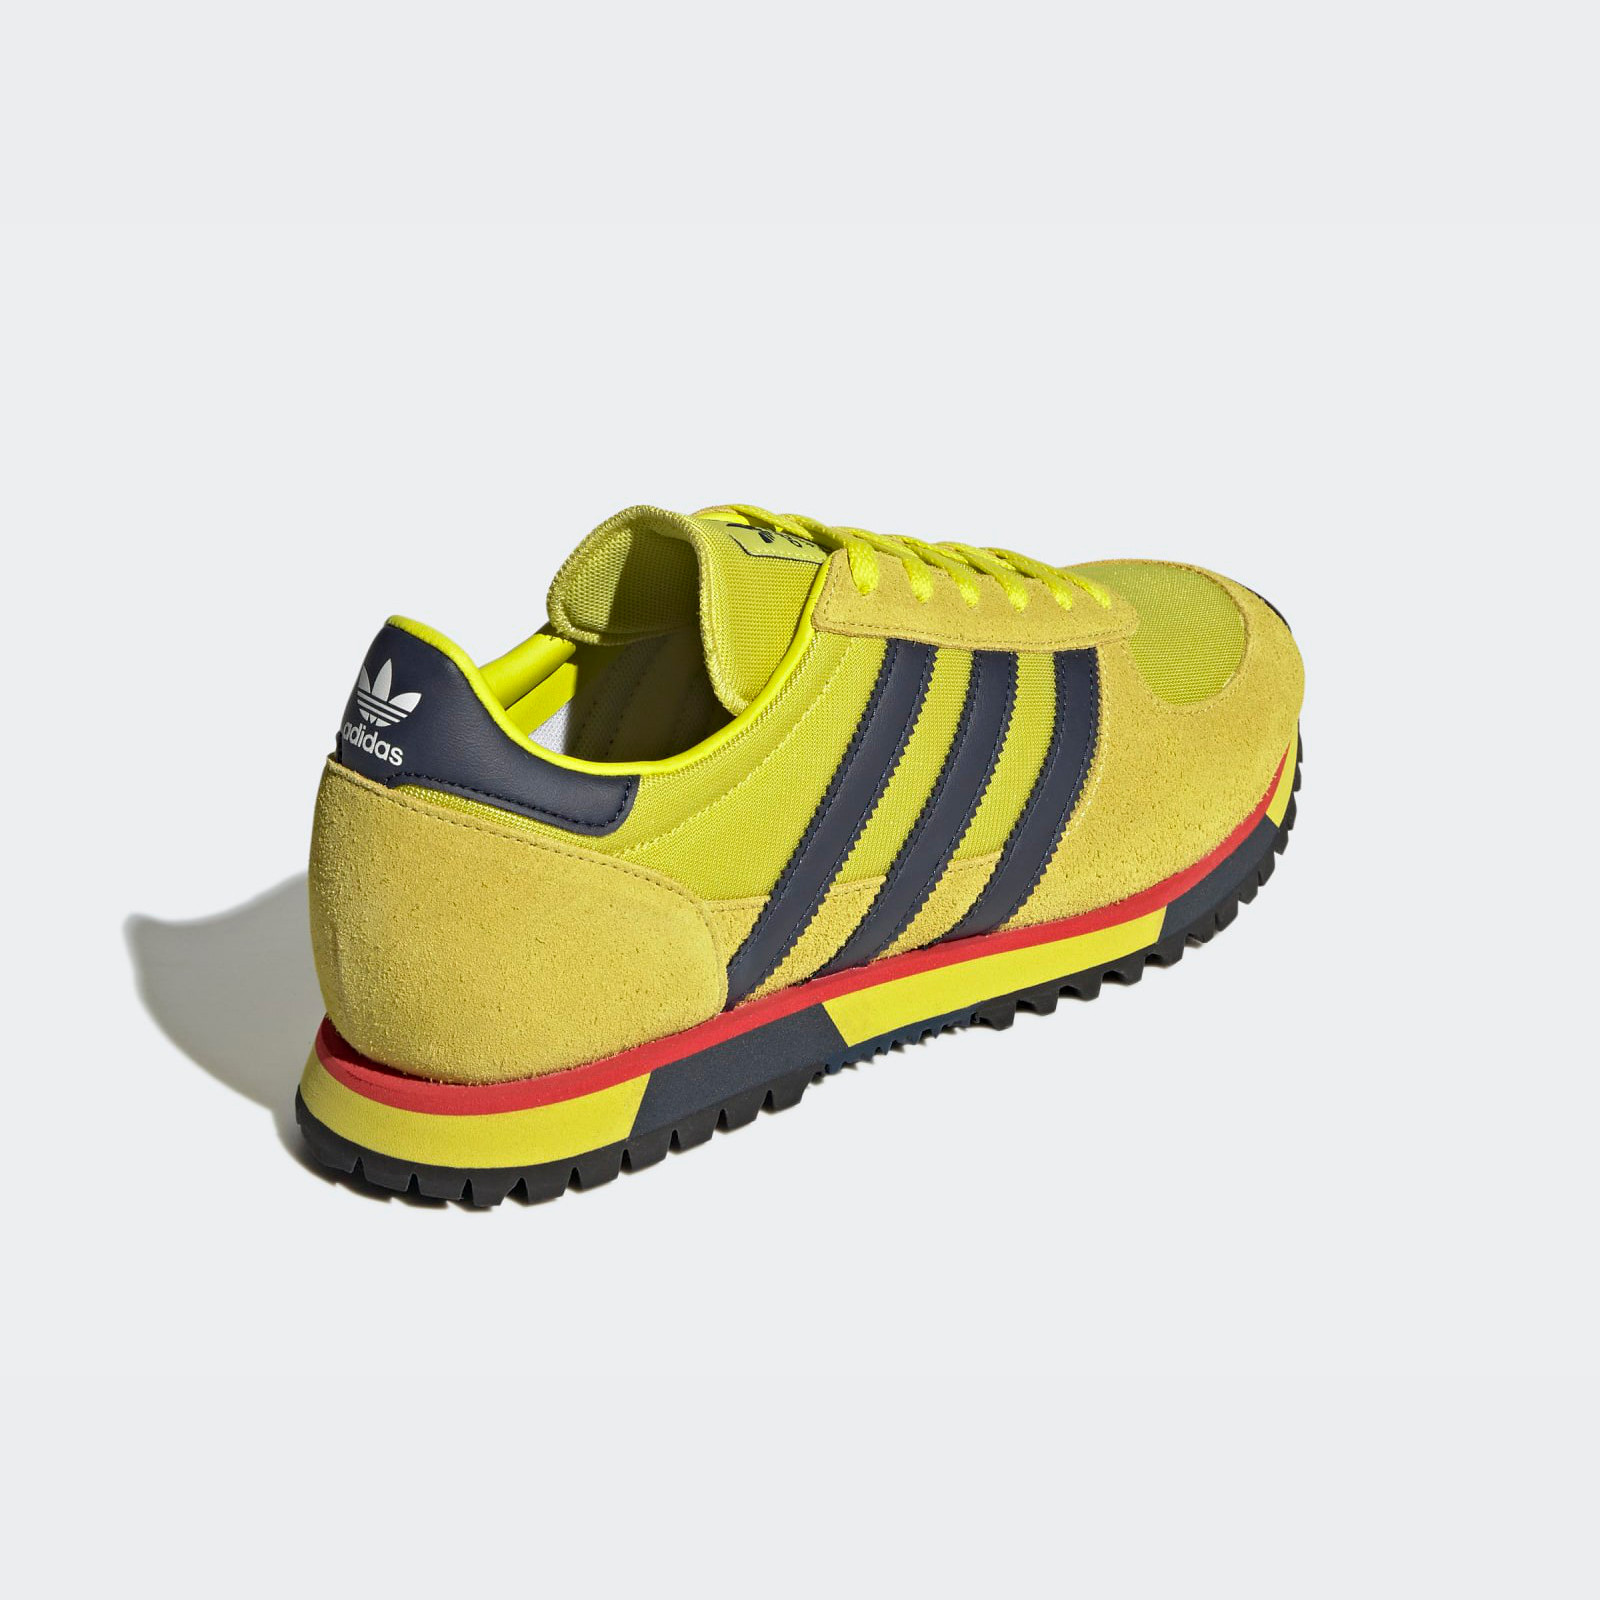 Adidas SPZL Marathon 86
Navy / Yellow